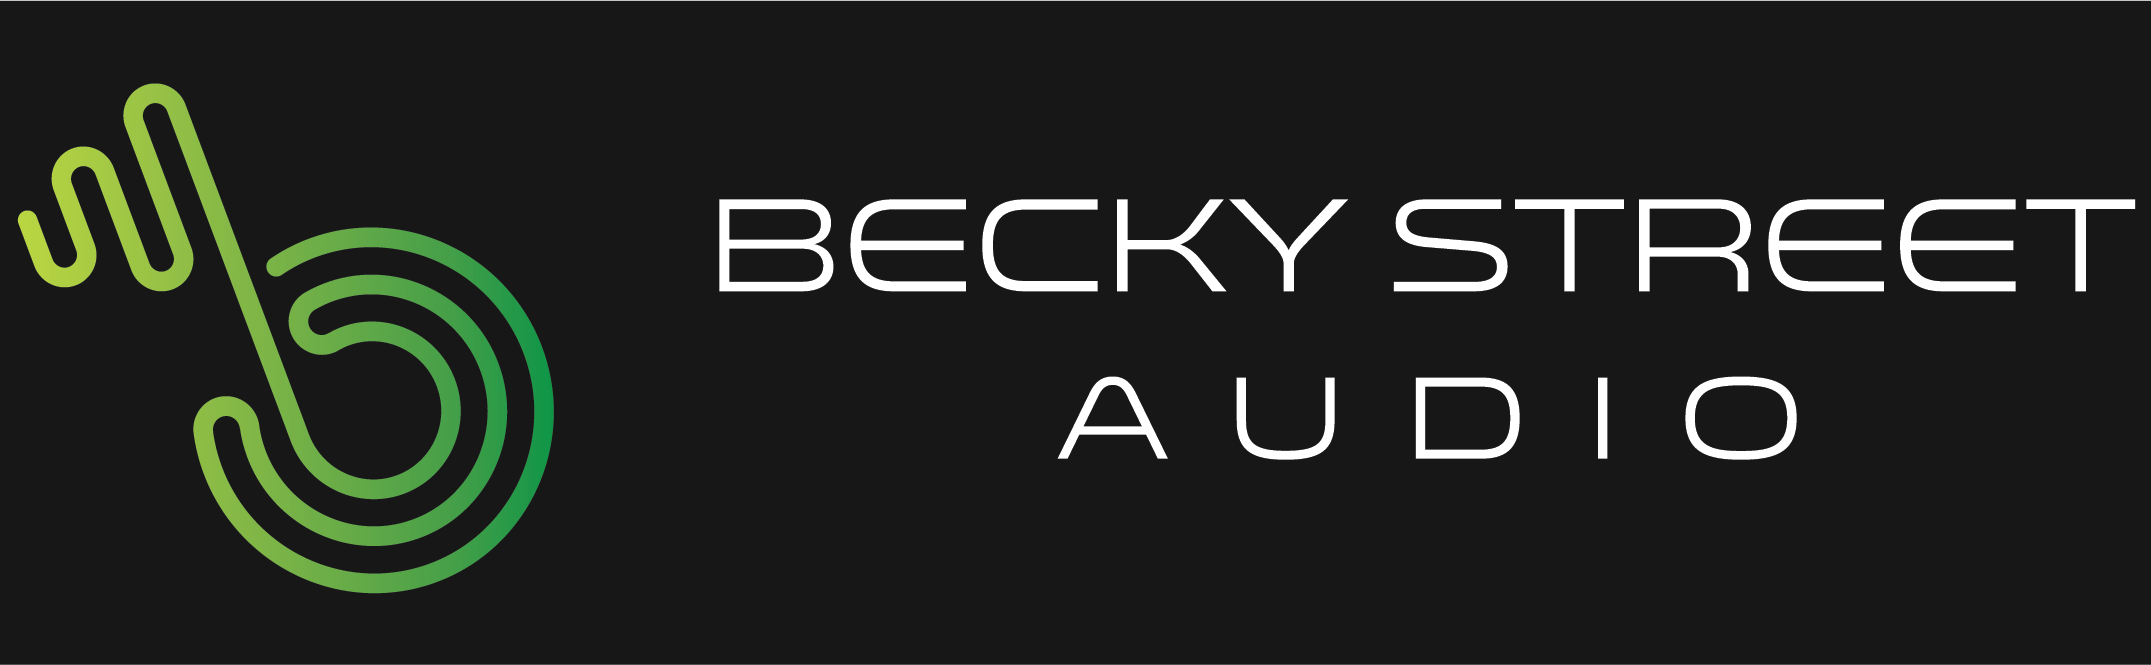 Becky Street Audio